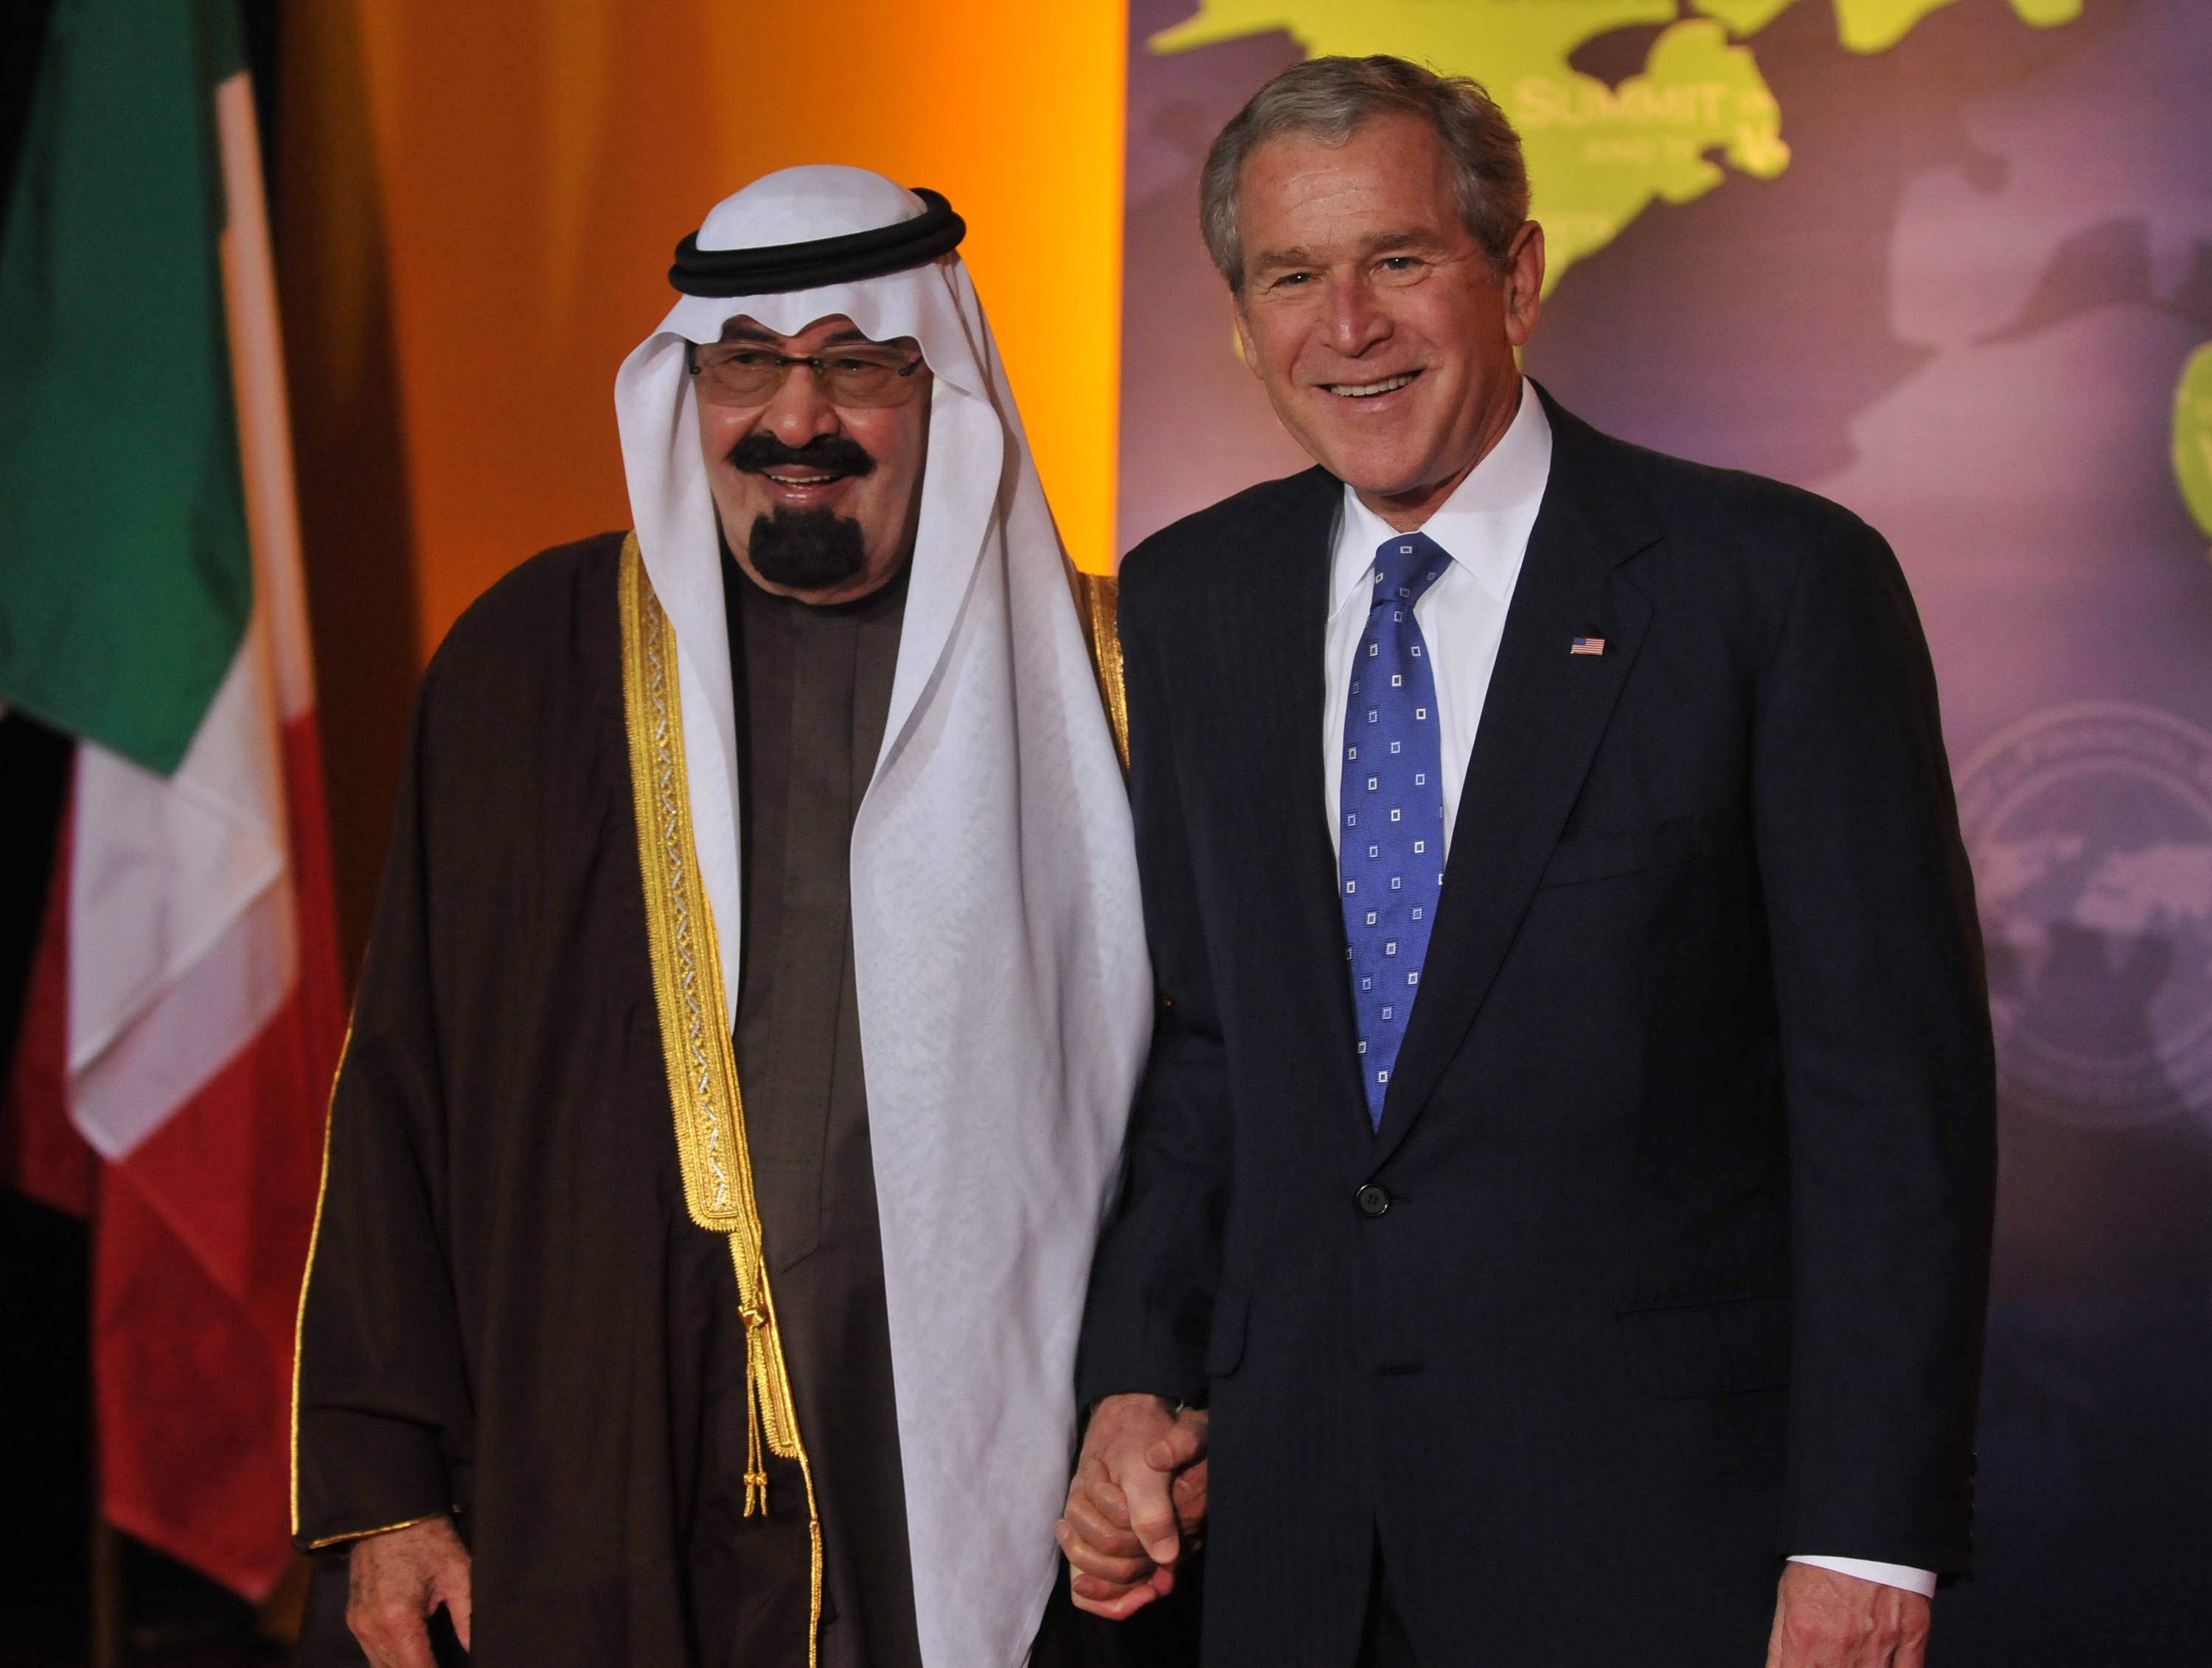 U.S. President George W. Bush poses with Saudi Arabian King Abdullah